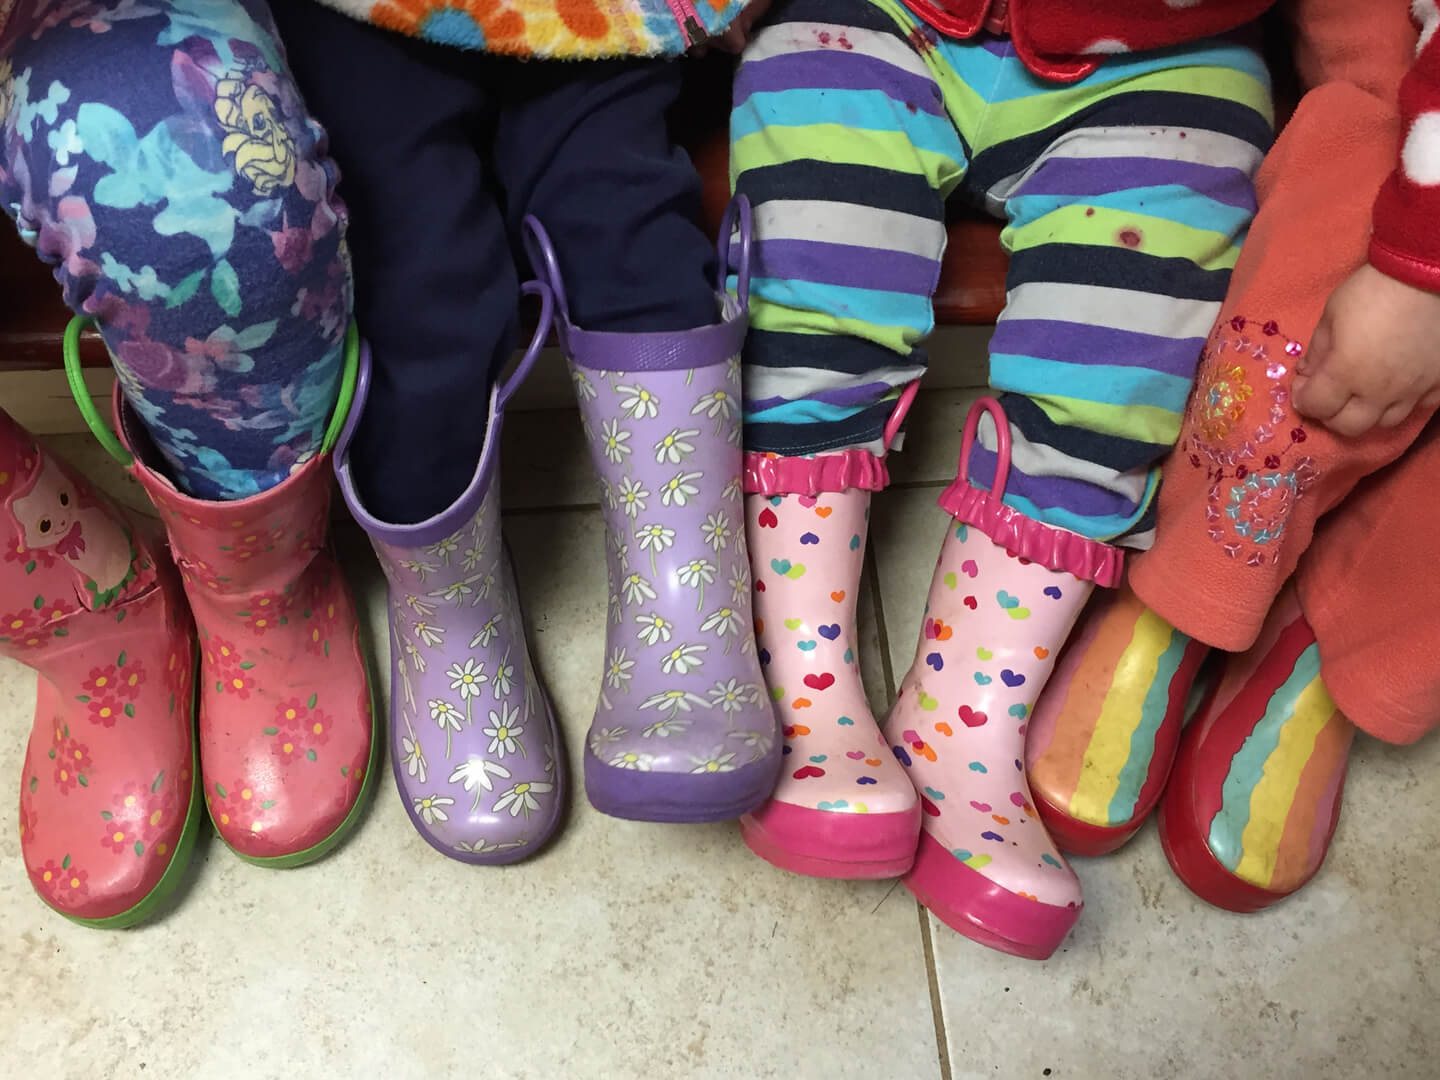 Children wearing colorful rainboots